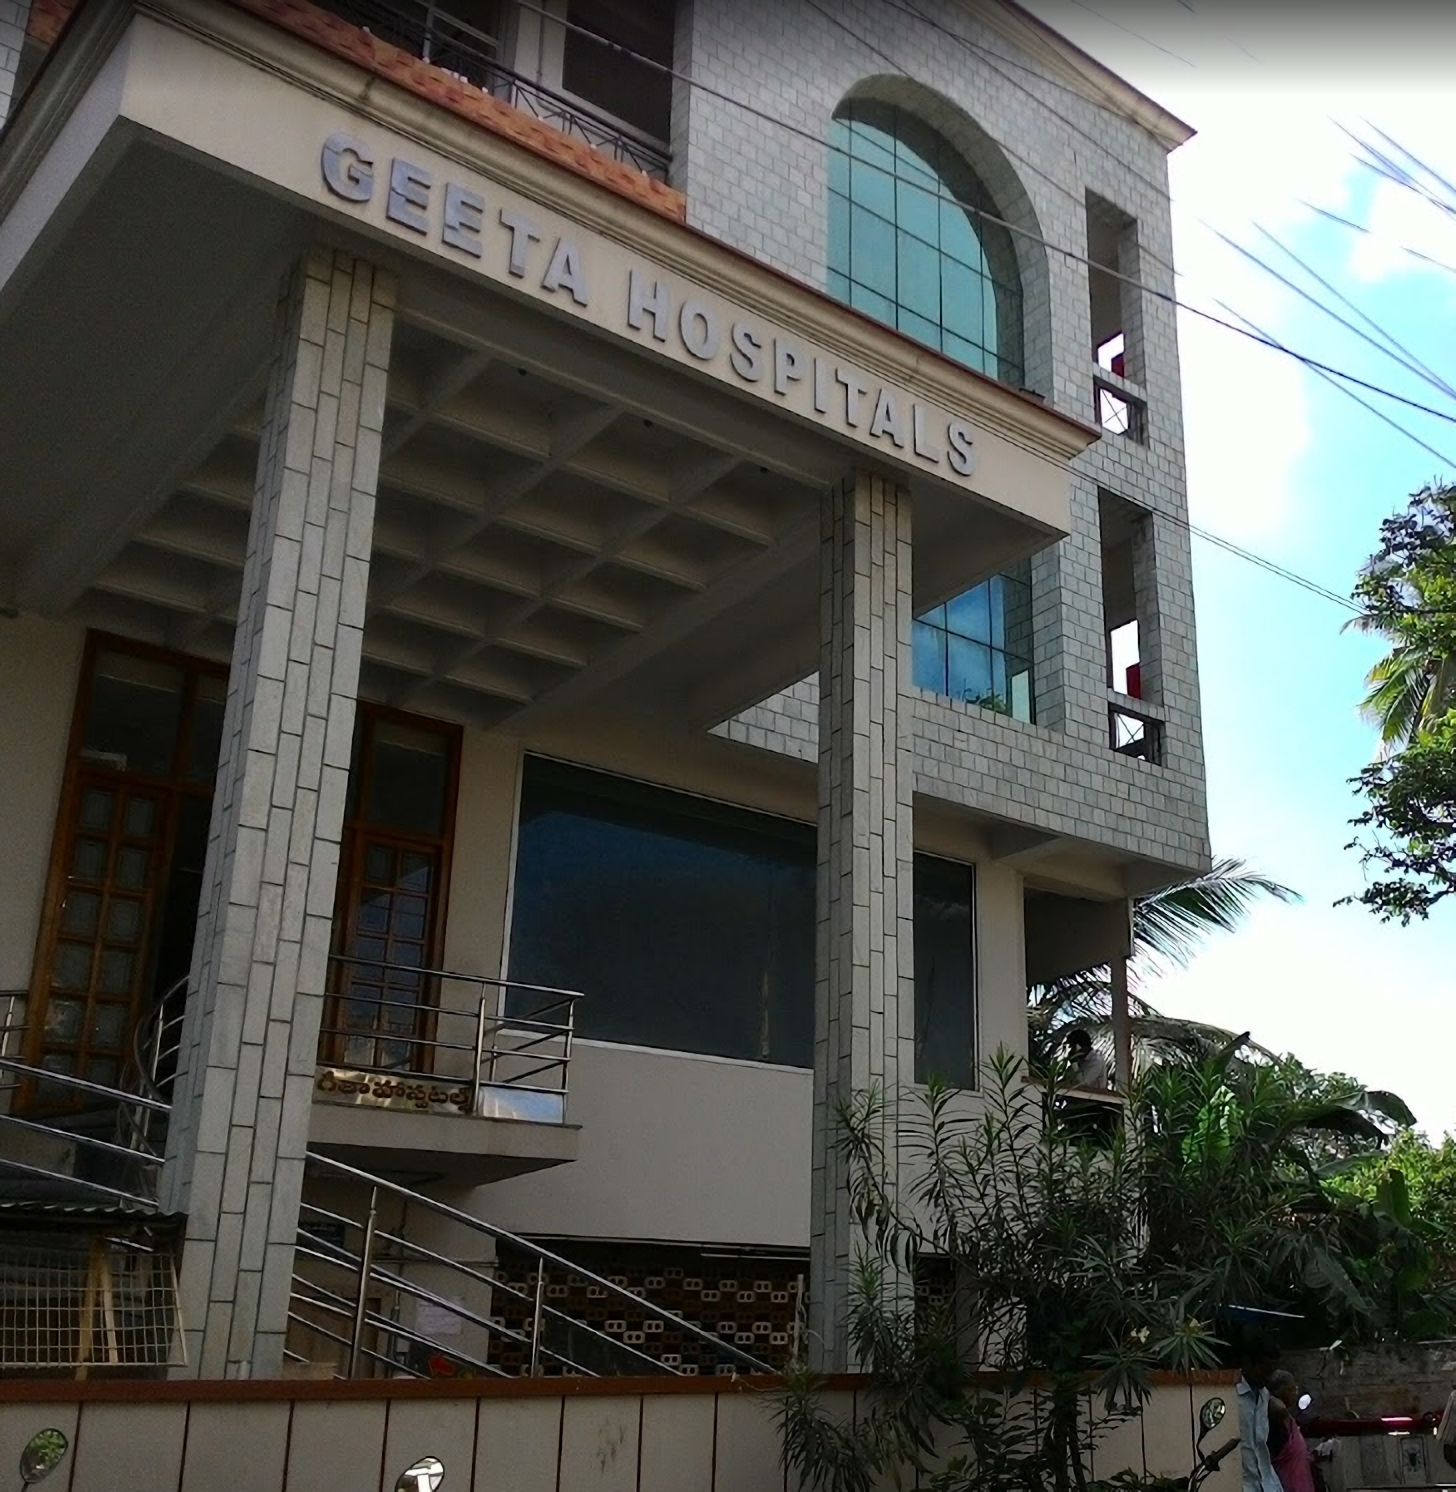 Geeta Hospital